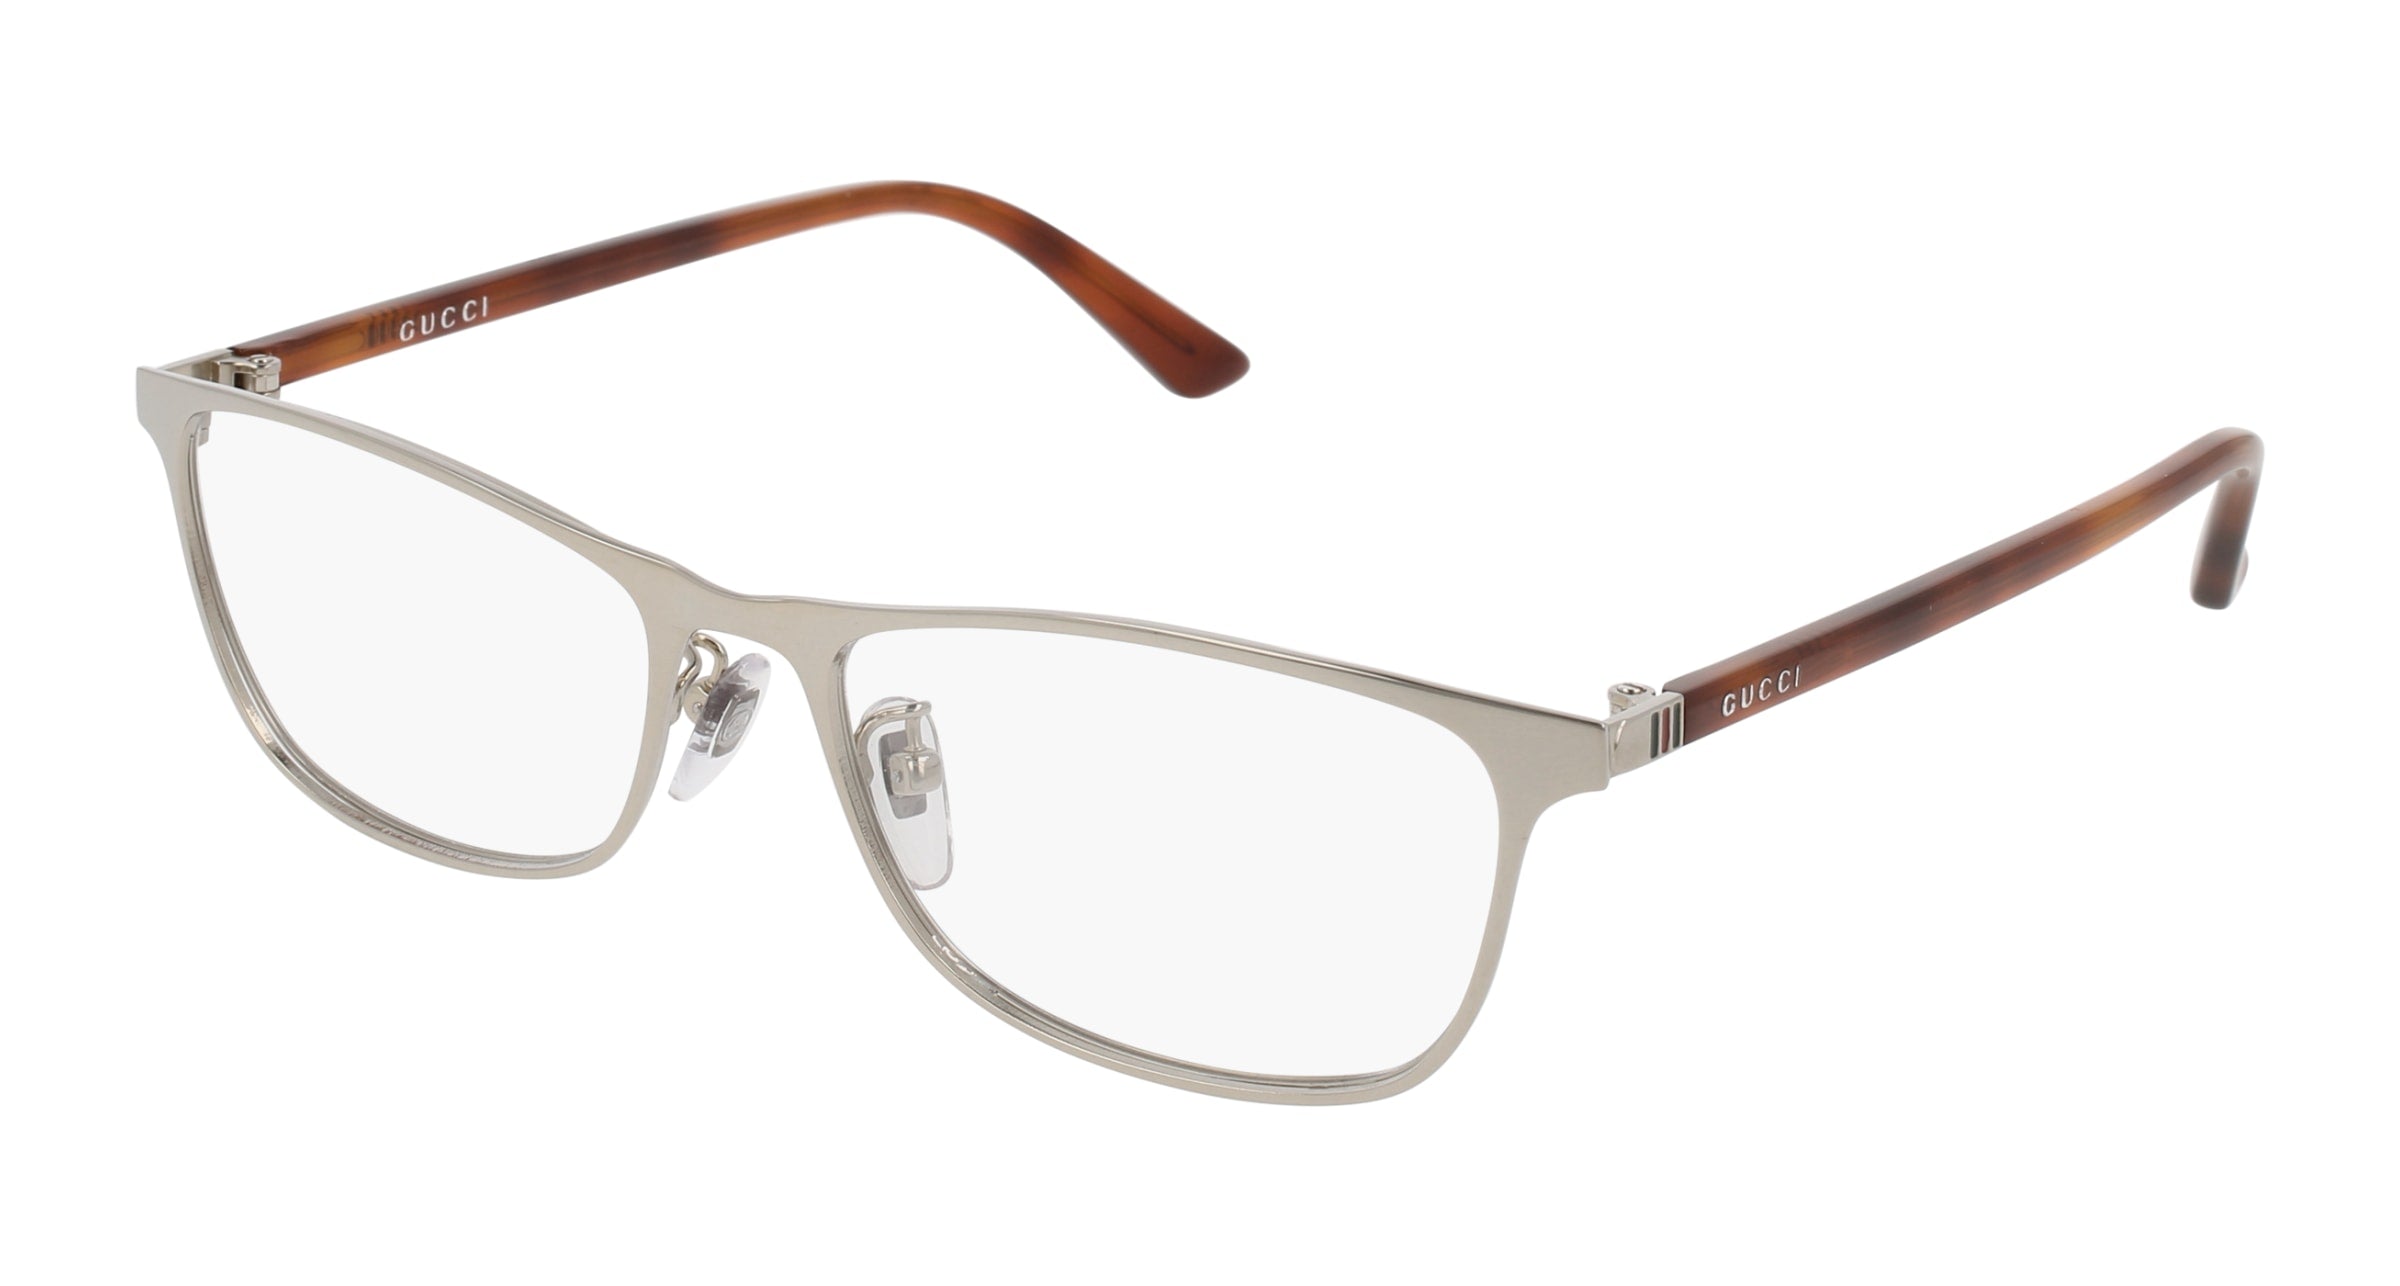 Gucci Unisex Eyeglasses GG0133OJ-004 Size 56